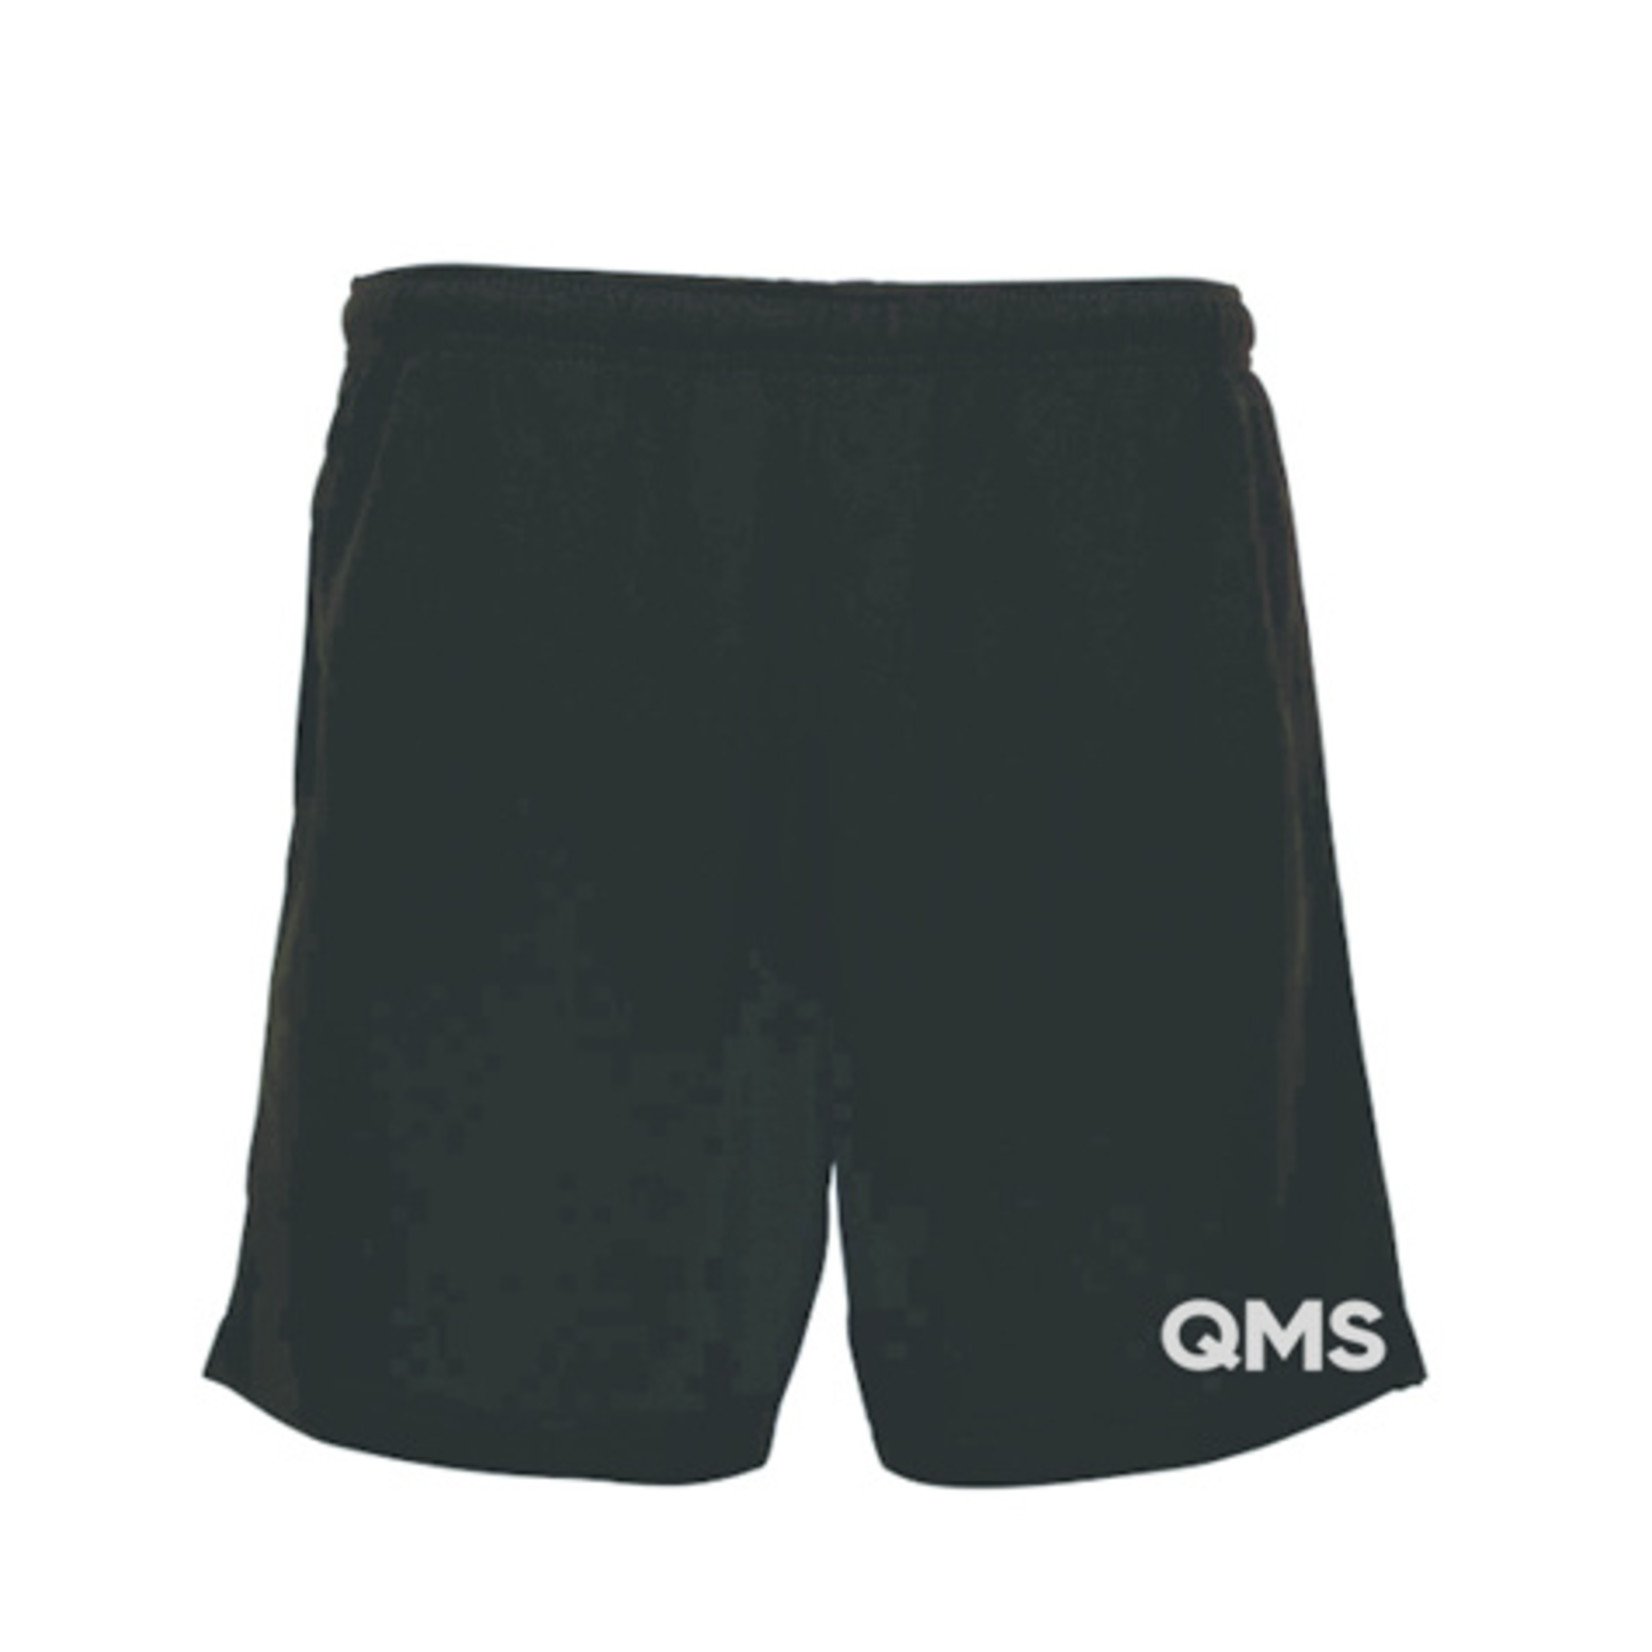 Adidas QMS Athletic Shorts - JR